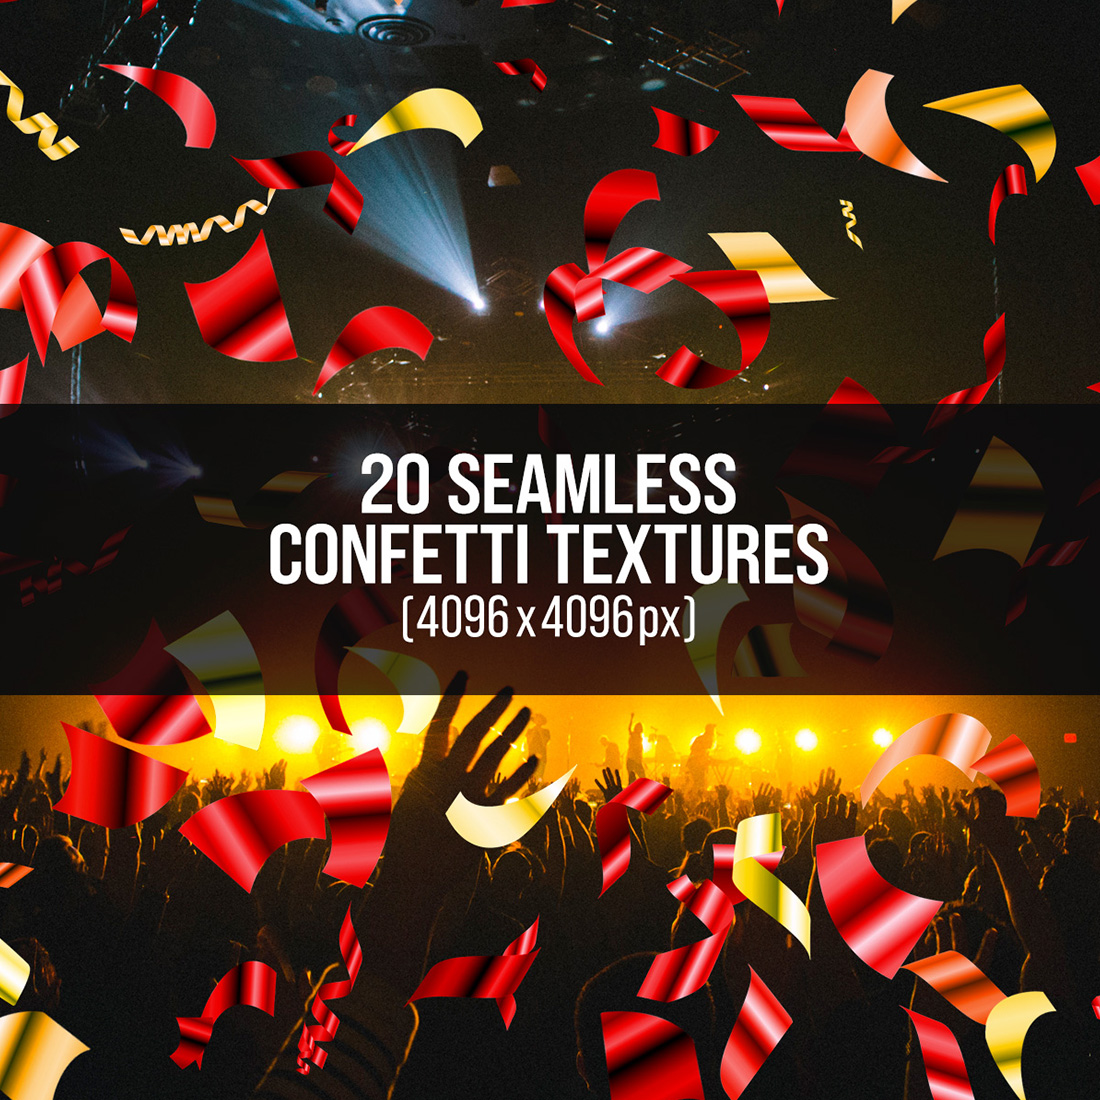 Seamless Confetti Textures Design cover image.